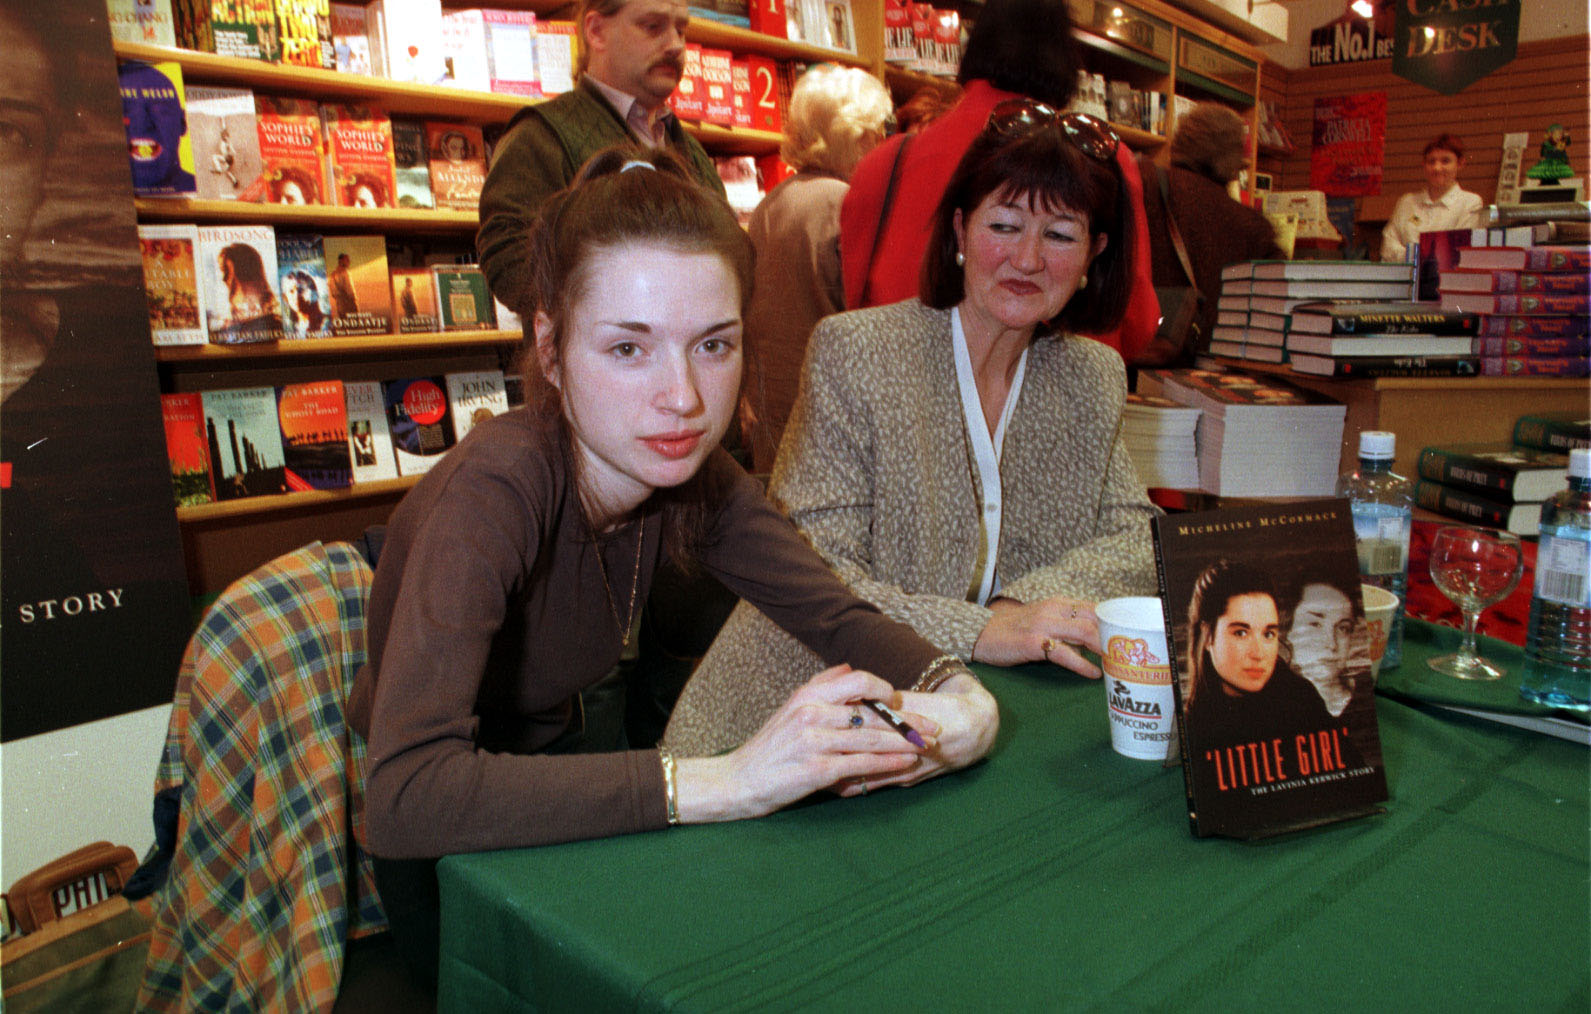 Rape survivor Lavinia Kerwick at the launch of her book ‘Little Girl’ in Dublin in 1997